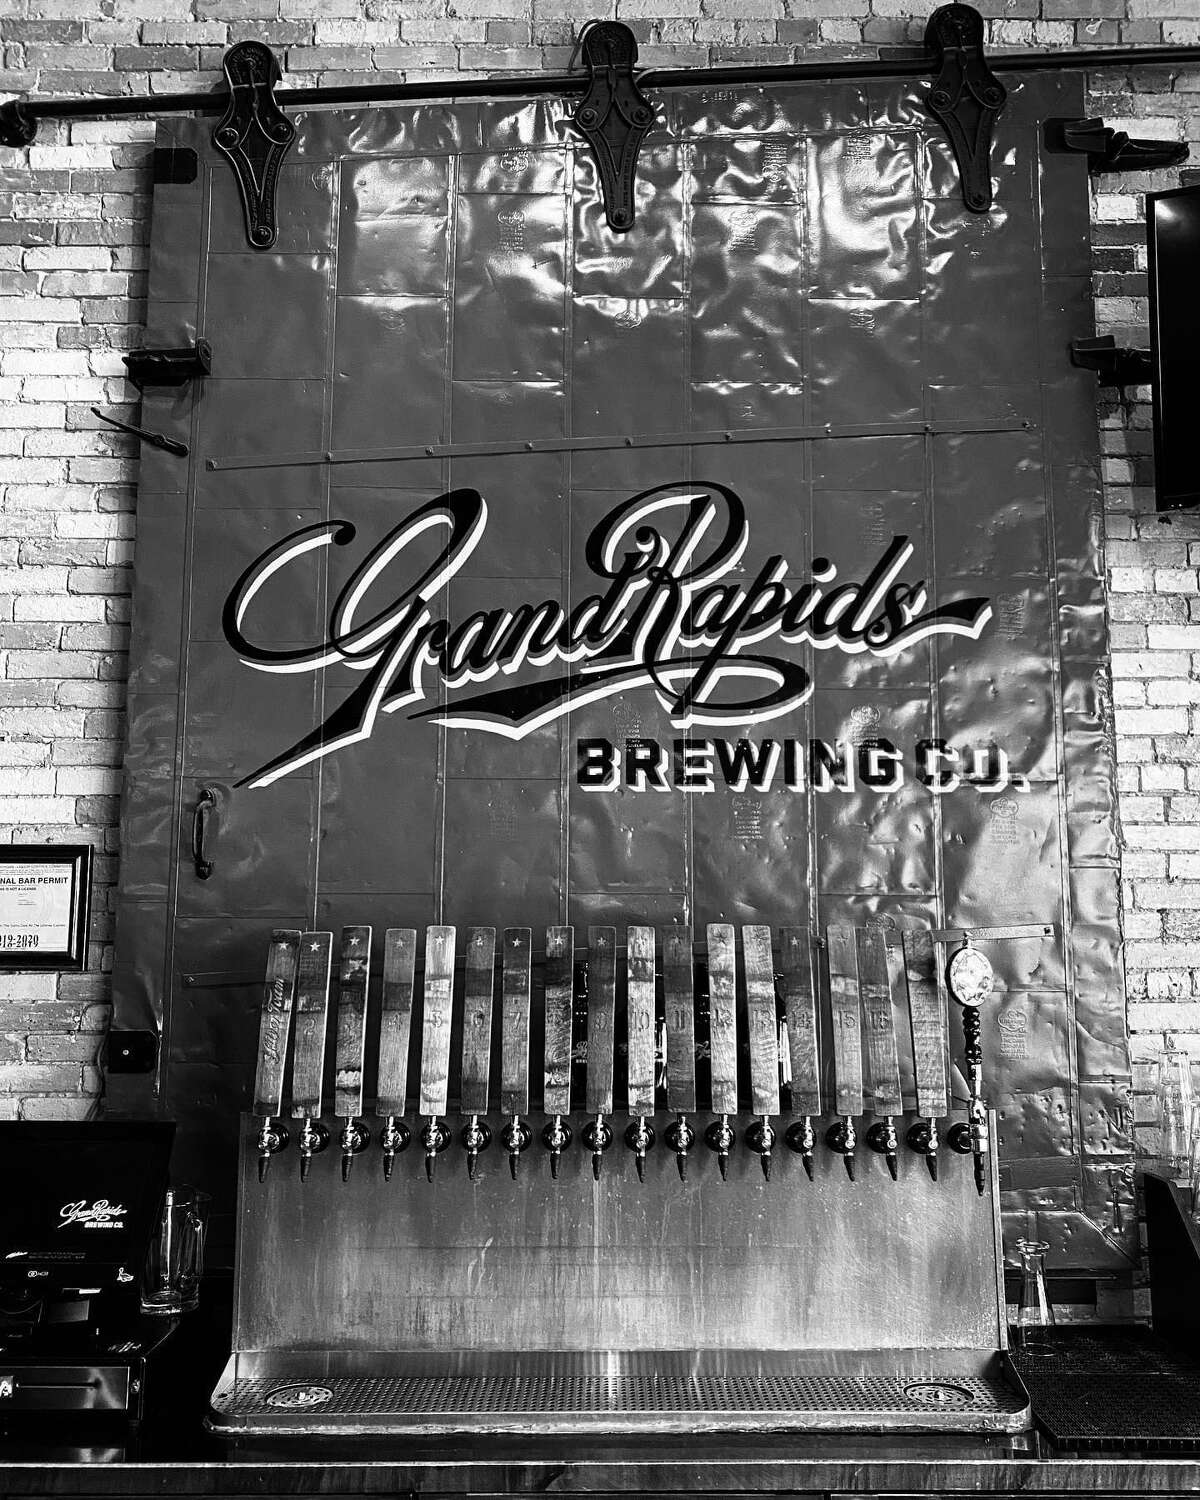 Grand Rapids Brewing Company